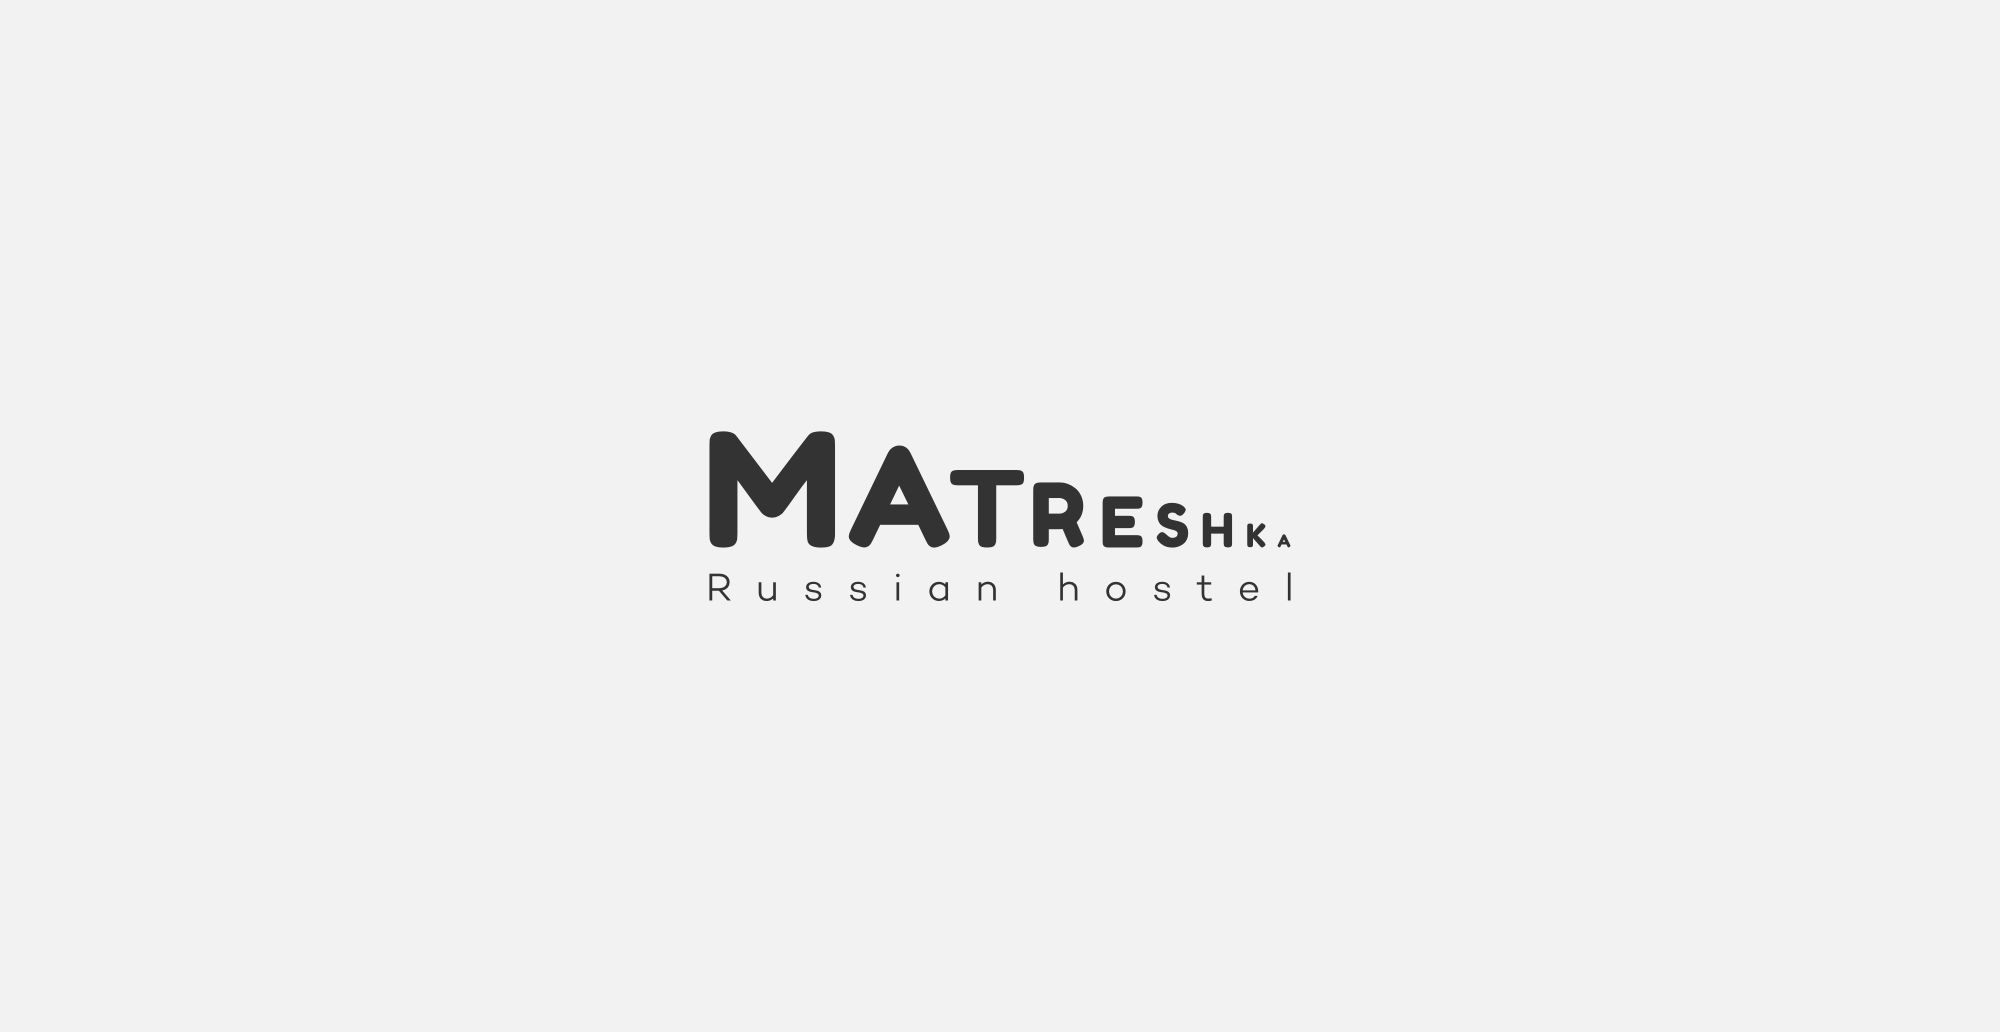 Логотип MATRESHKA Russian hostel - дизайнер qwertymax2